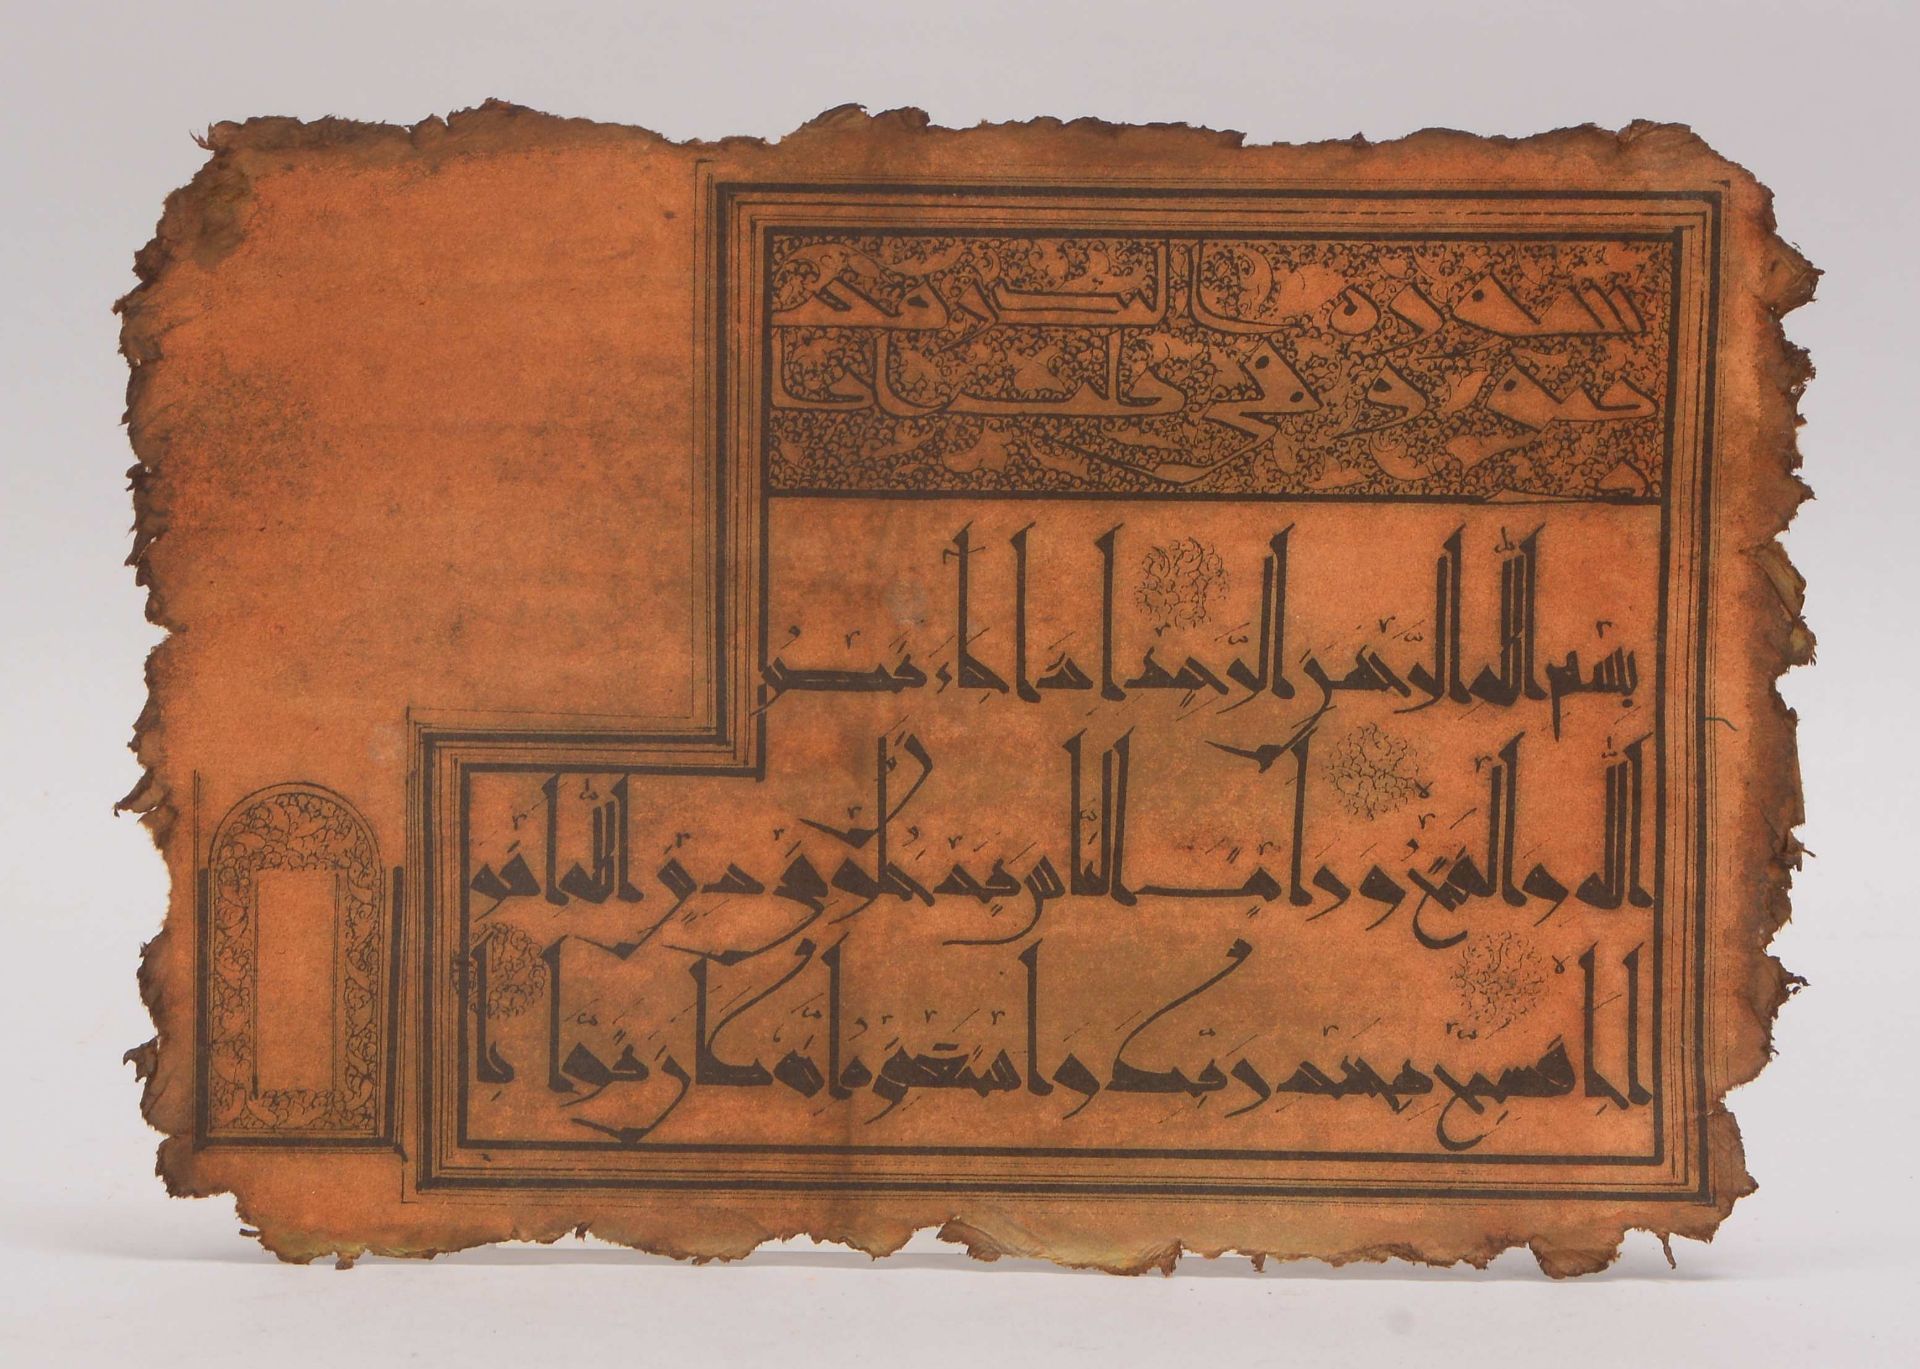 Alte Koranseite (20. Jahrhundert) in Kofi-Schrift; Maße 19 x 28 cm